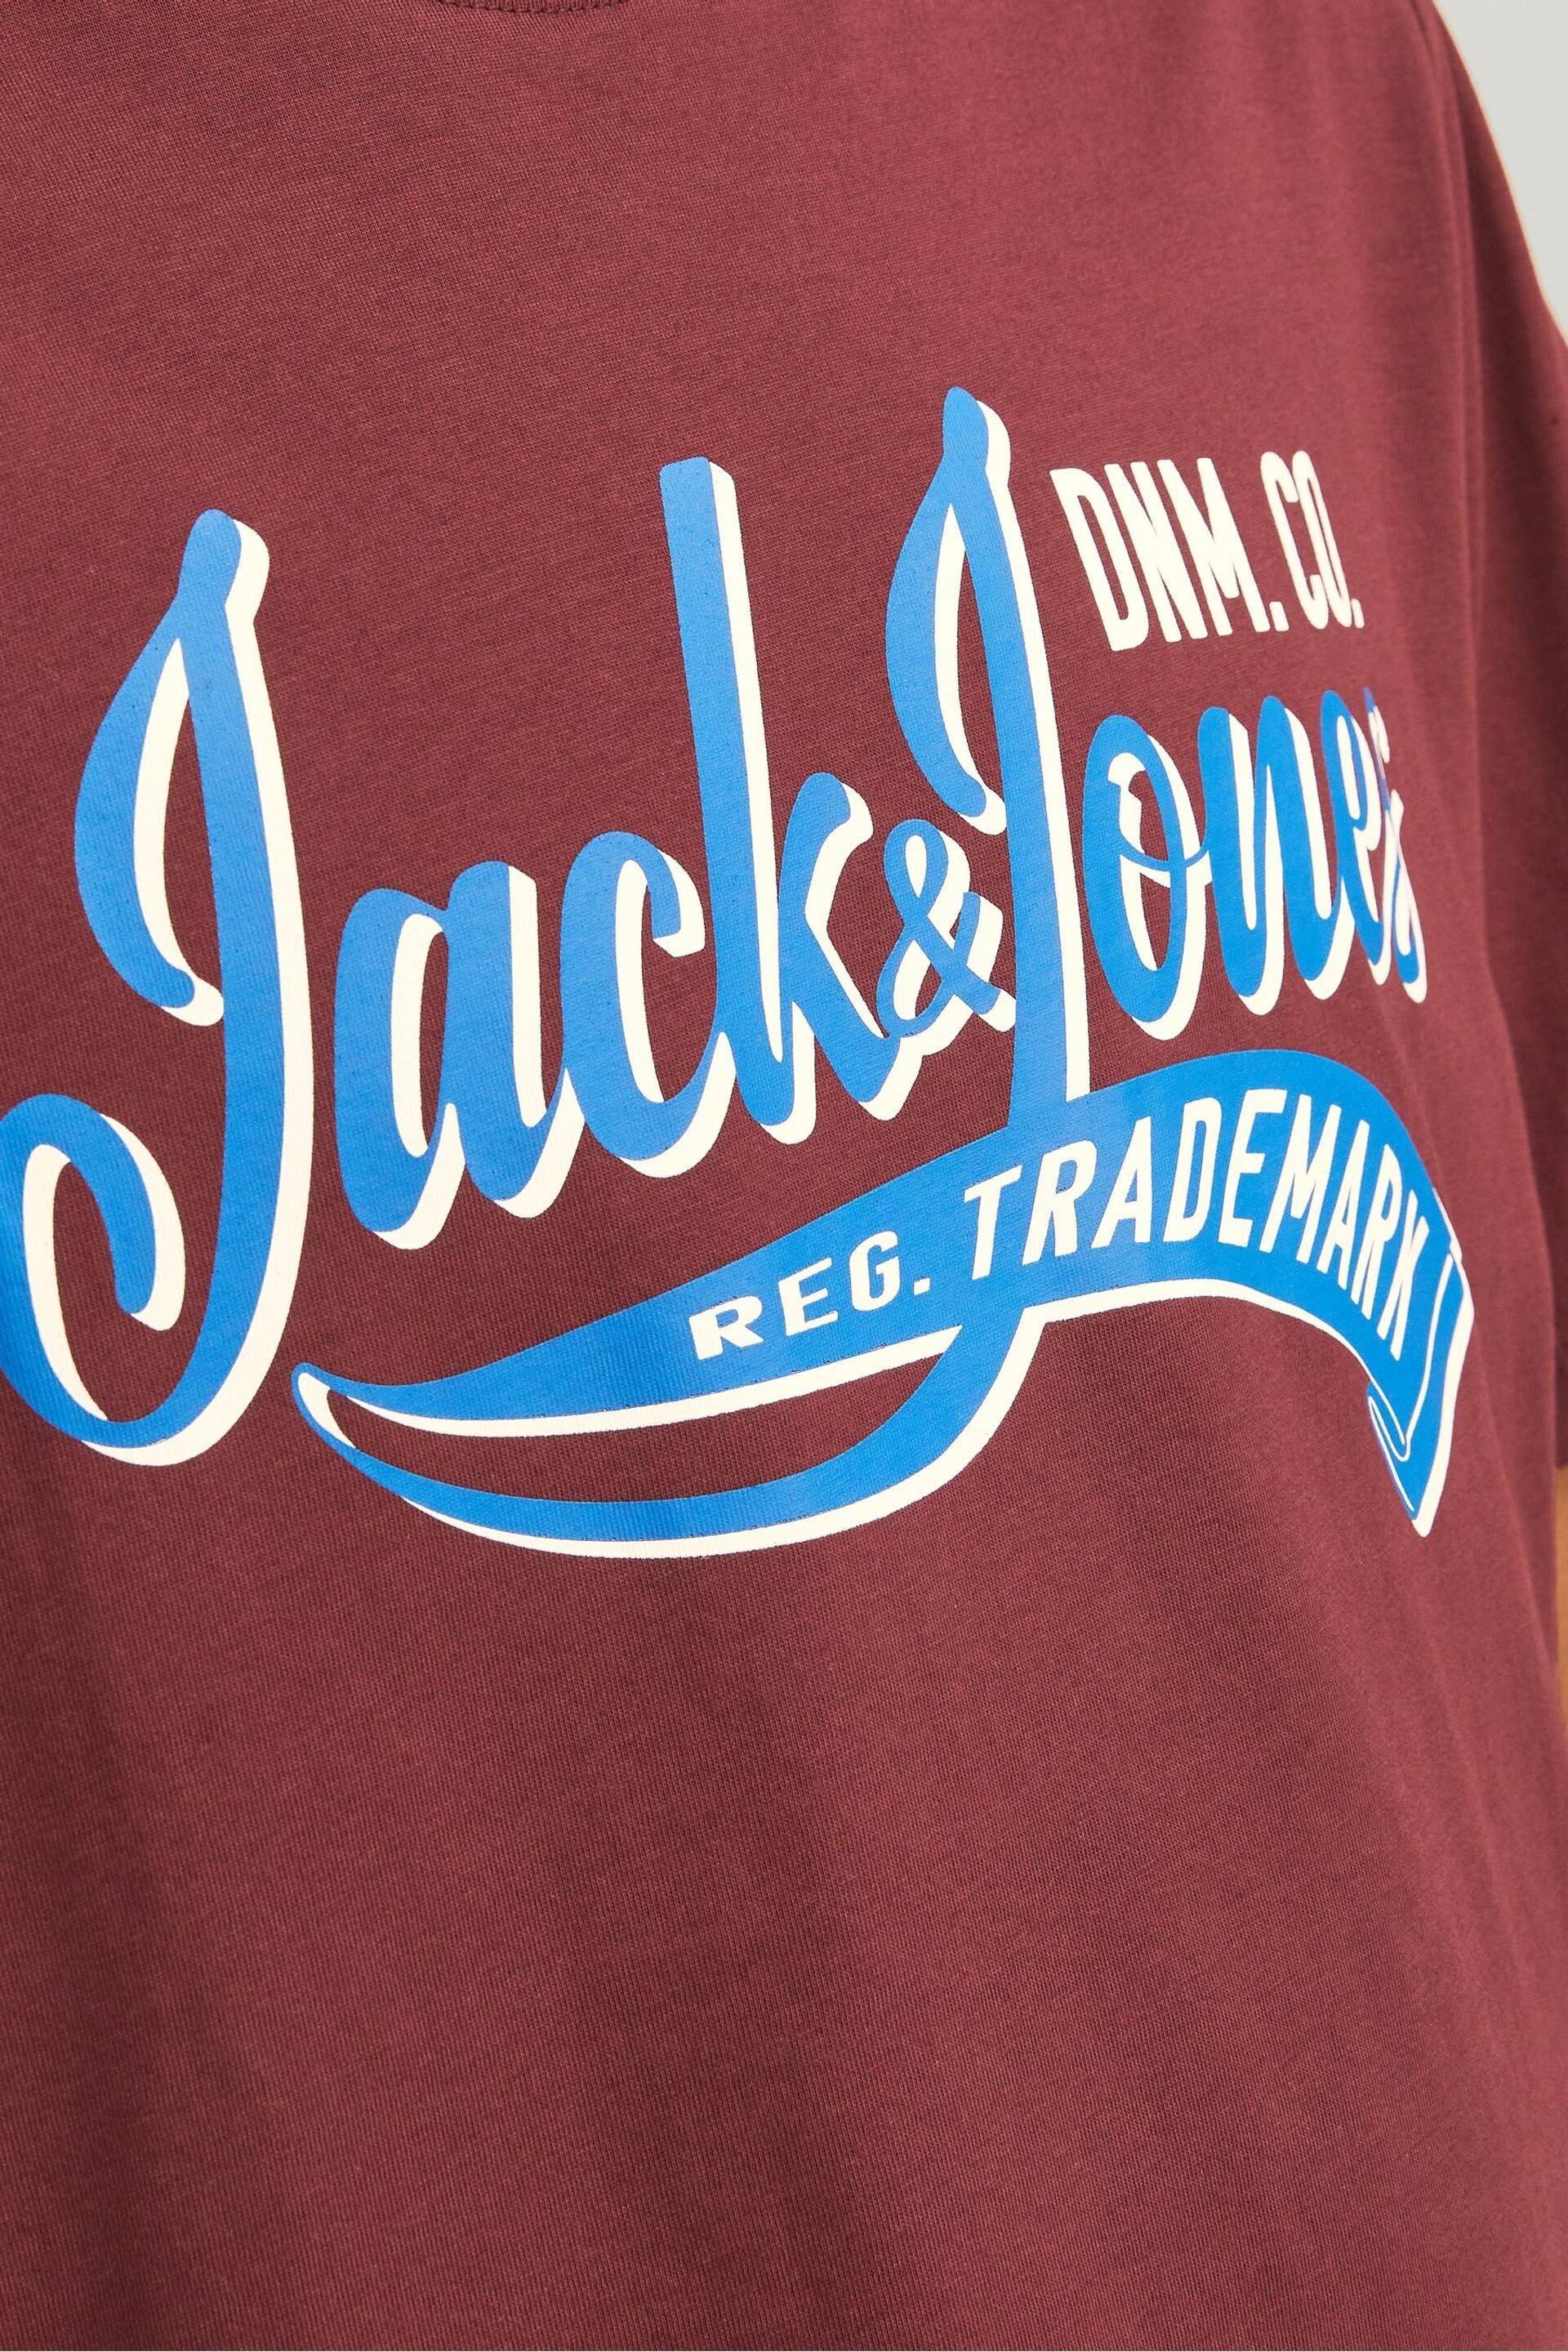 JACK & JONES Red Short Sleeve Logo T-Shirt - Image 6 of 6